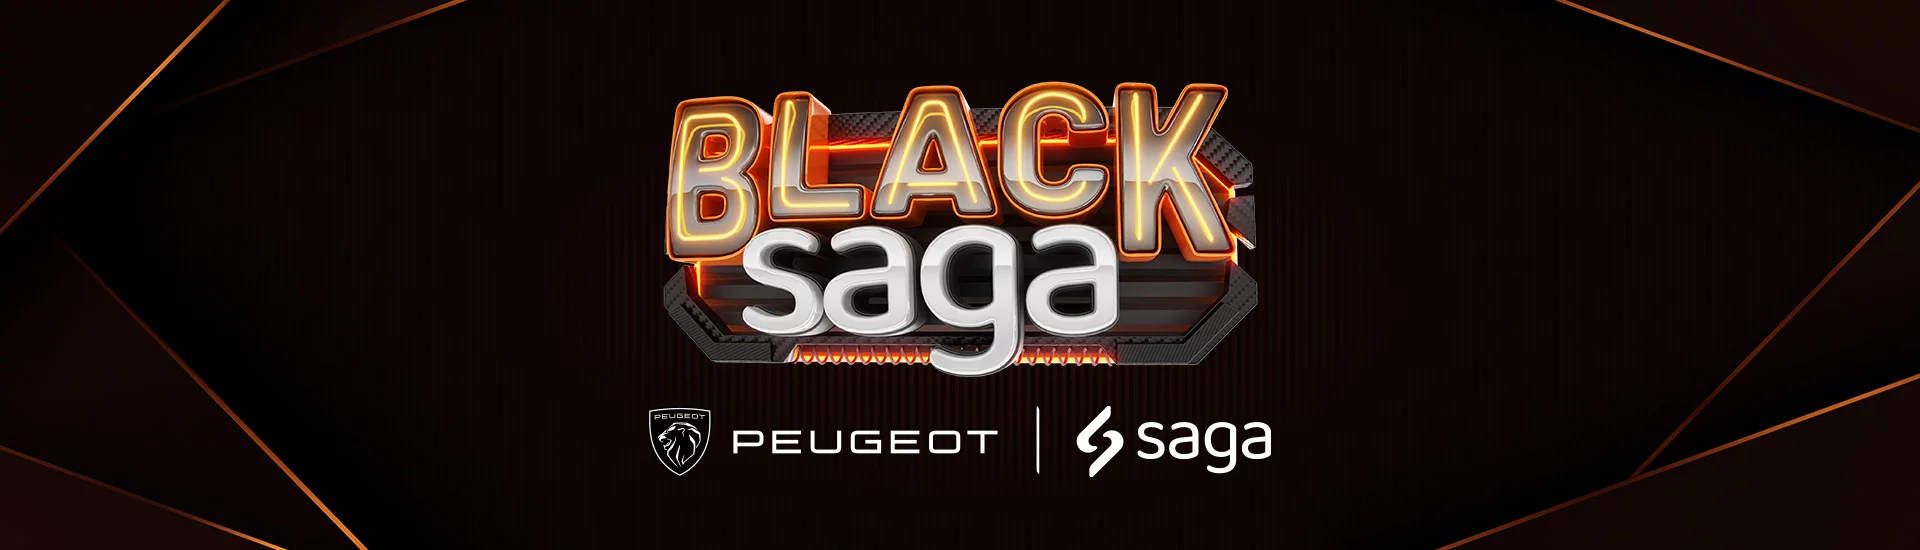 Black Friday Saga Peugeot!